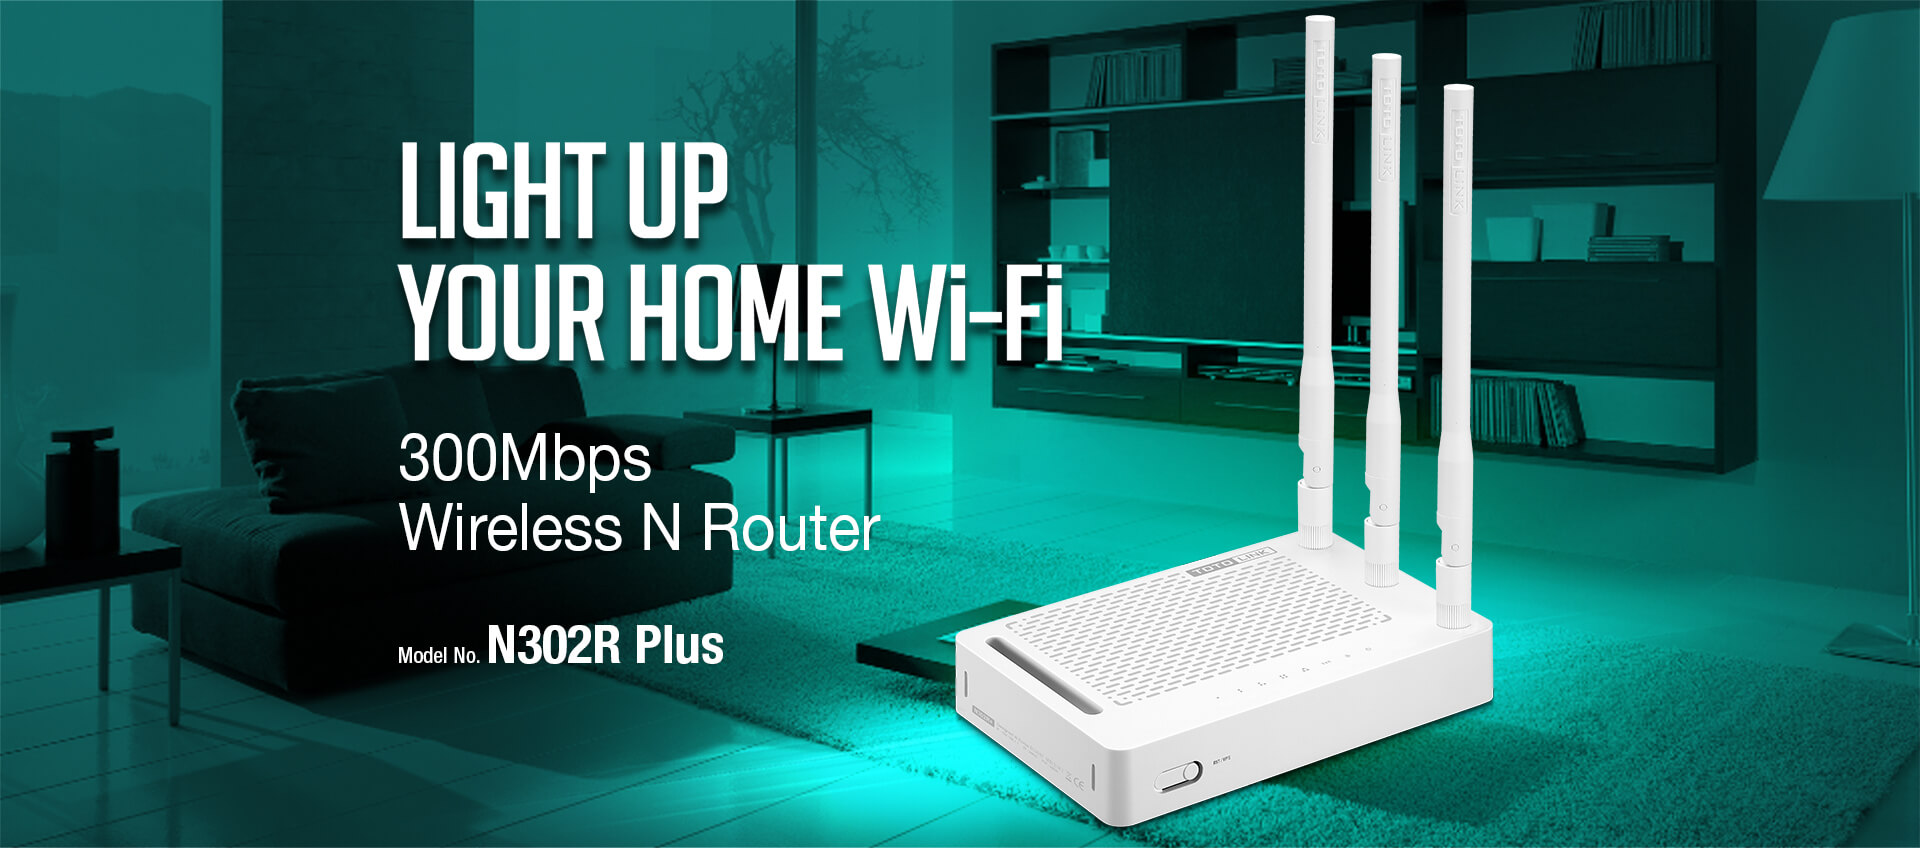 N302R Plus 300Mbps Wireless N Router Dubai